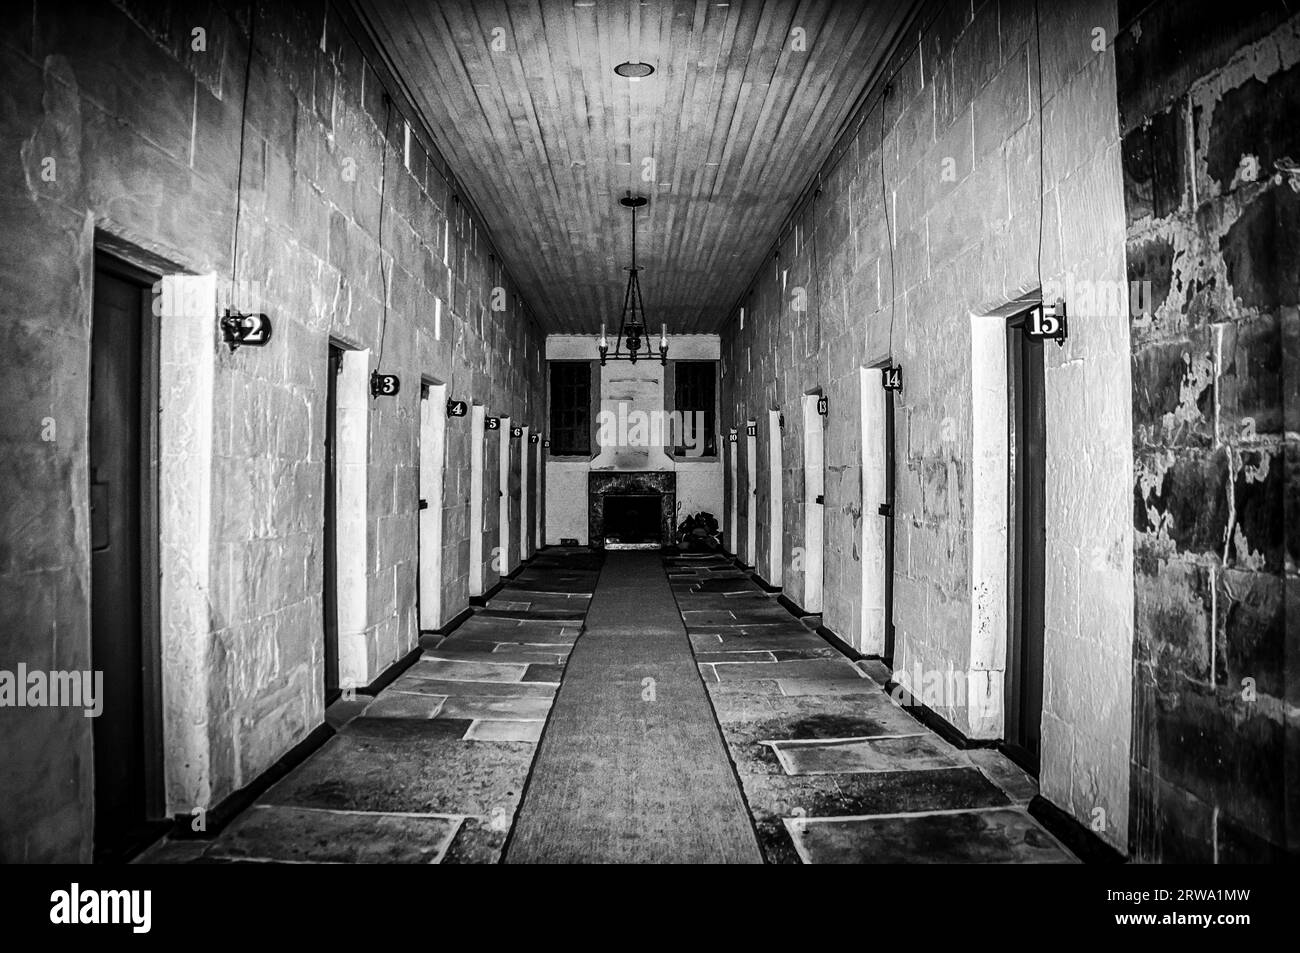 Port Arthur, Tasmanien, Australien am 8. Juni 2013: Blick auf den Zellblock im historischen Port Arthur Strafkolonie Gefängnis Stockfoto